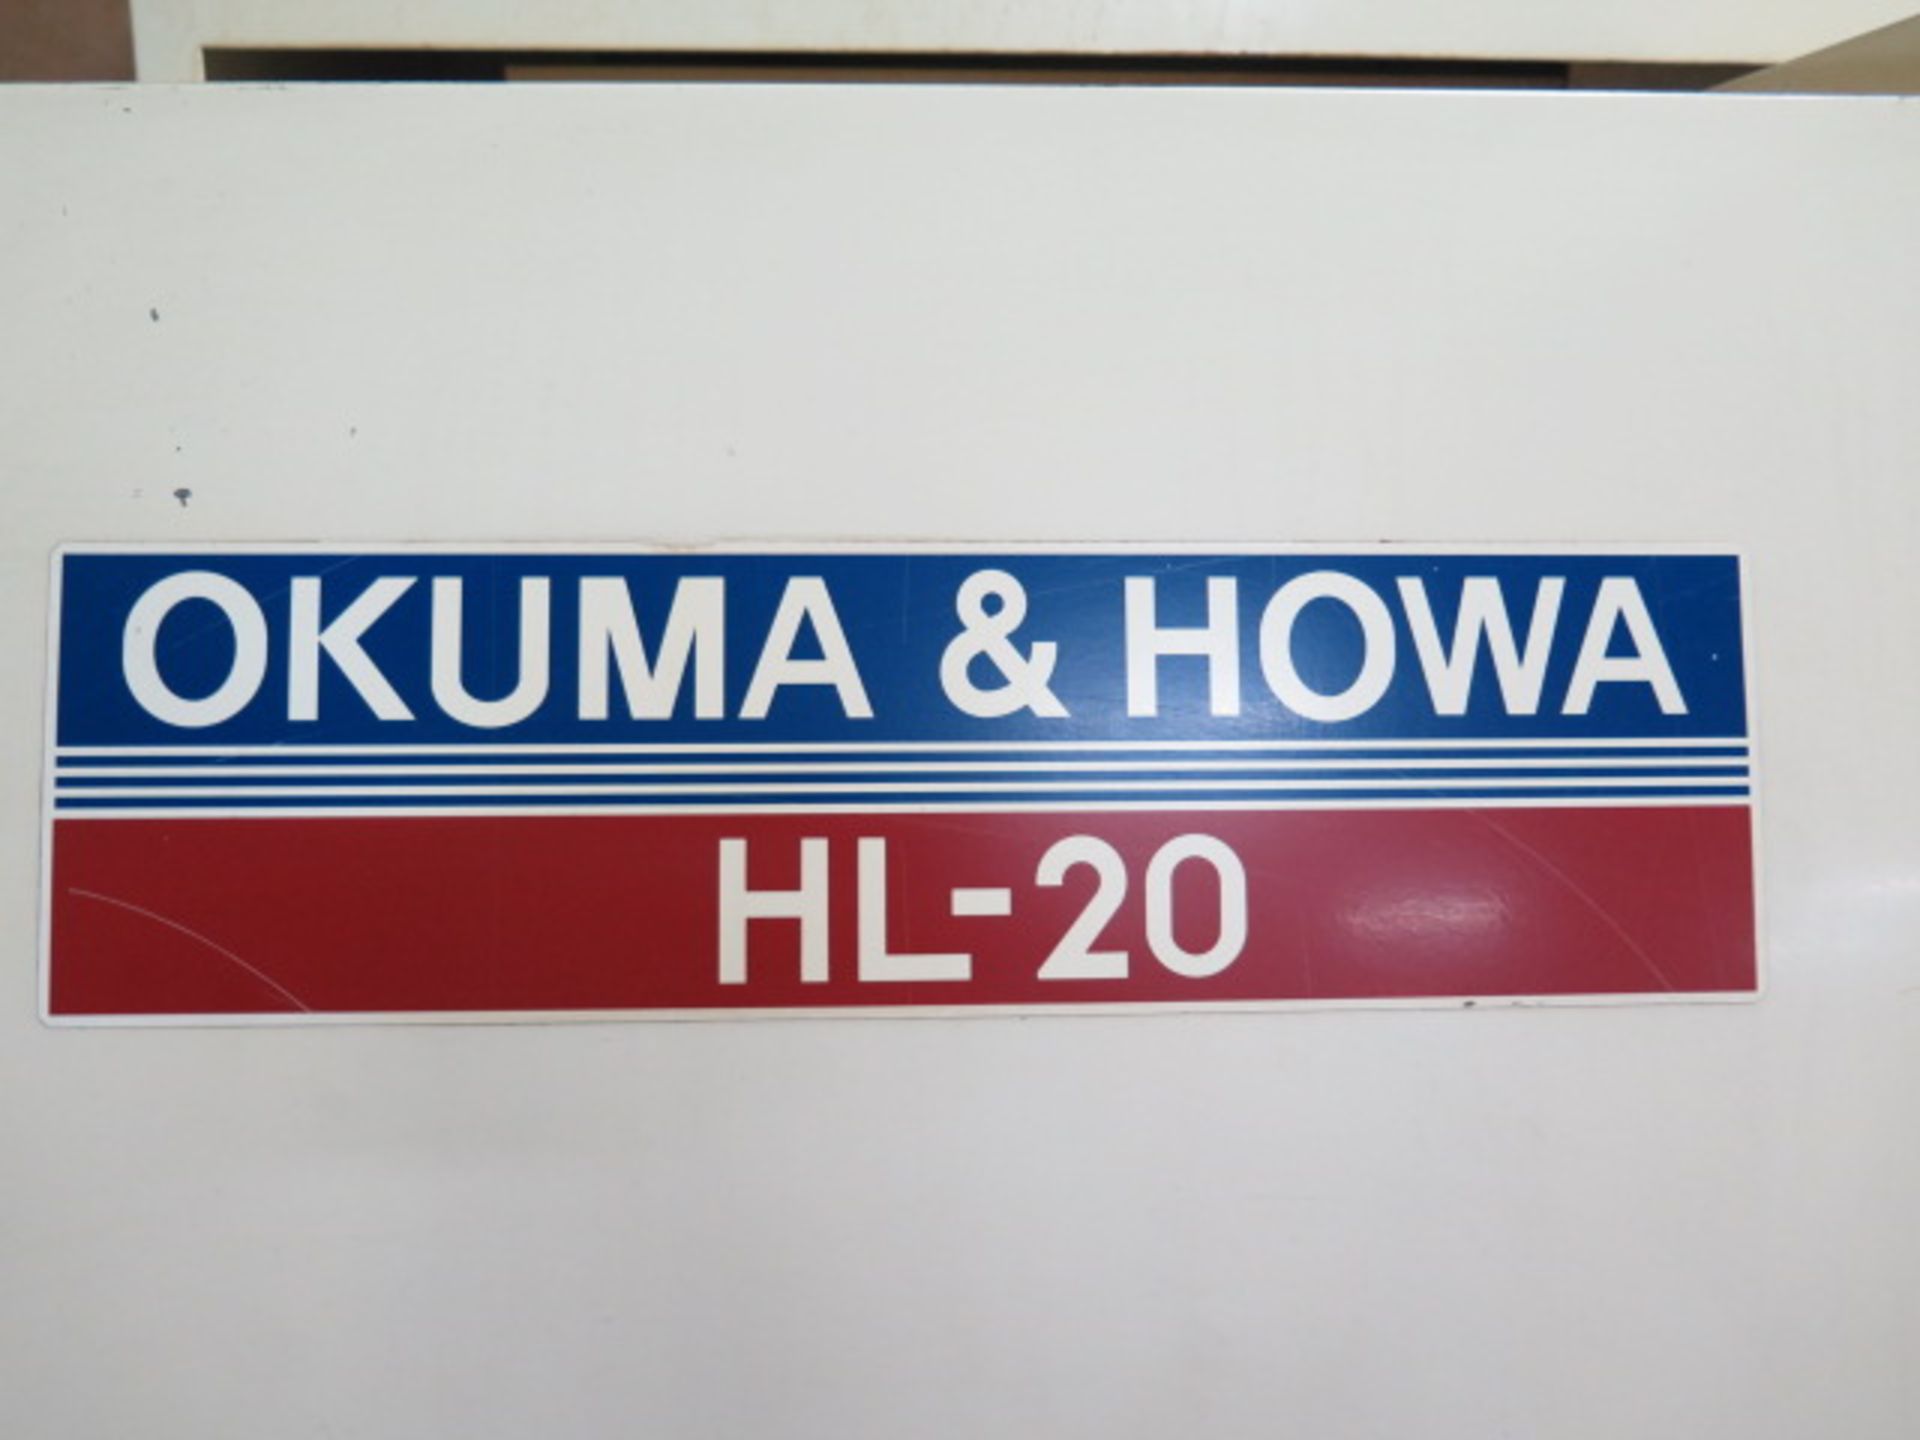 Okuma & Howa HL-20 CNC Turning Center s/n 00888 w/ Fanuc 18i-T Controls, 12-Station, SOLD AS IS - Image 11 of 12